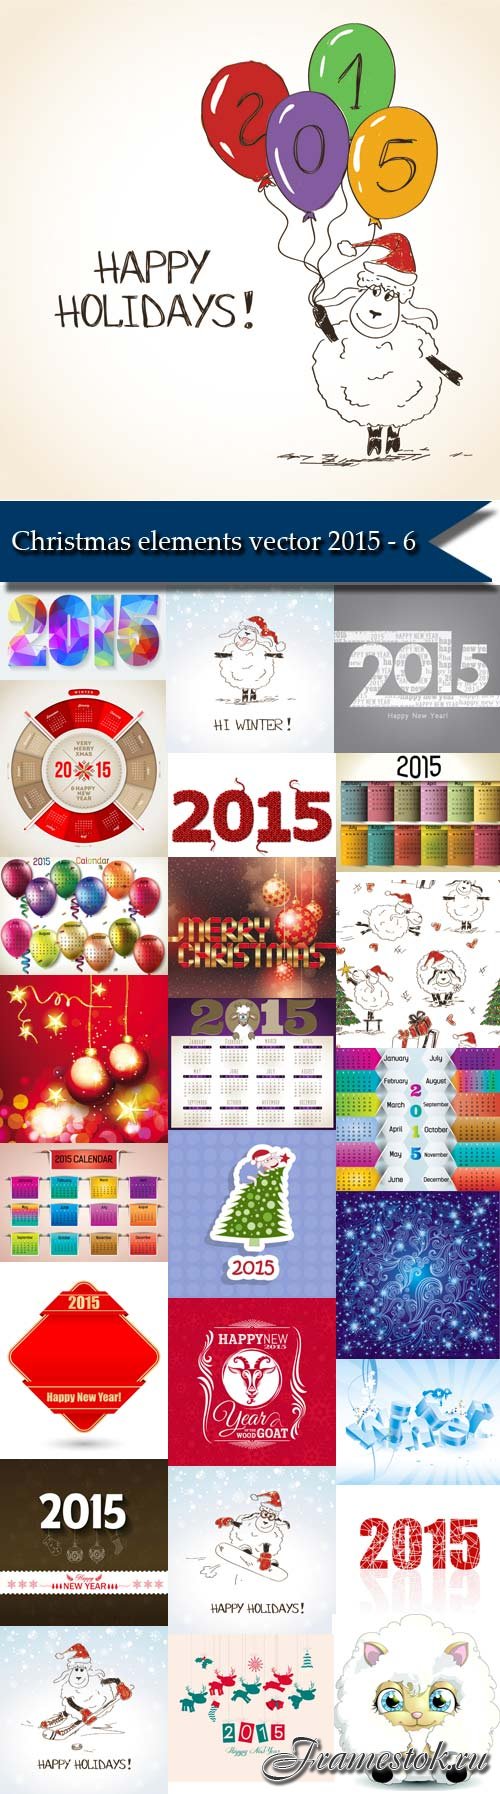 Christmas elements vector 2015 - 6